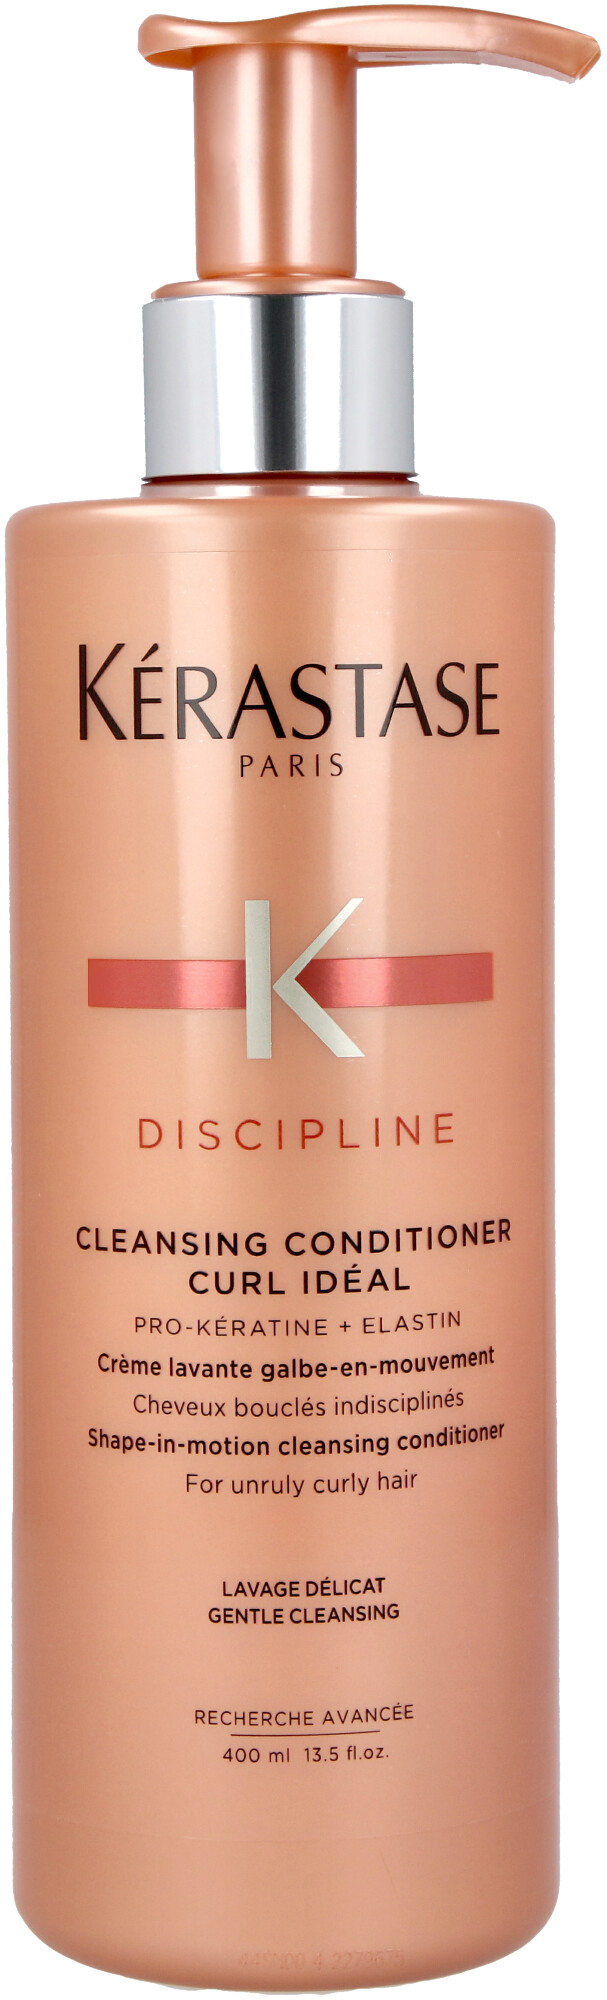 Kérastase Discipline Curl Idéal Cleansing Conditioner shampoo |